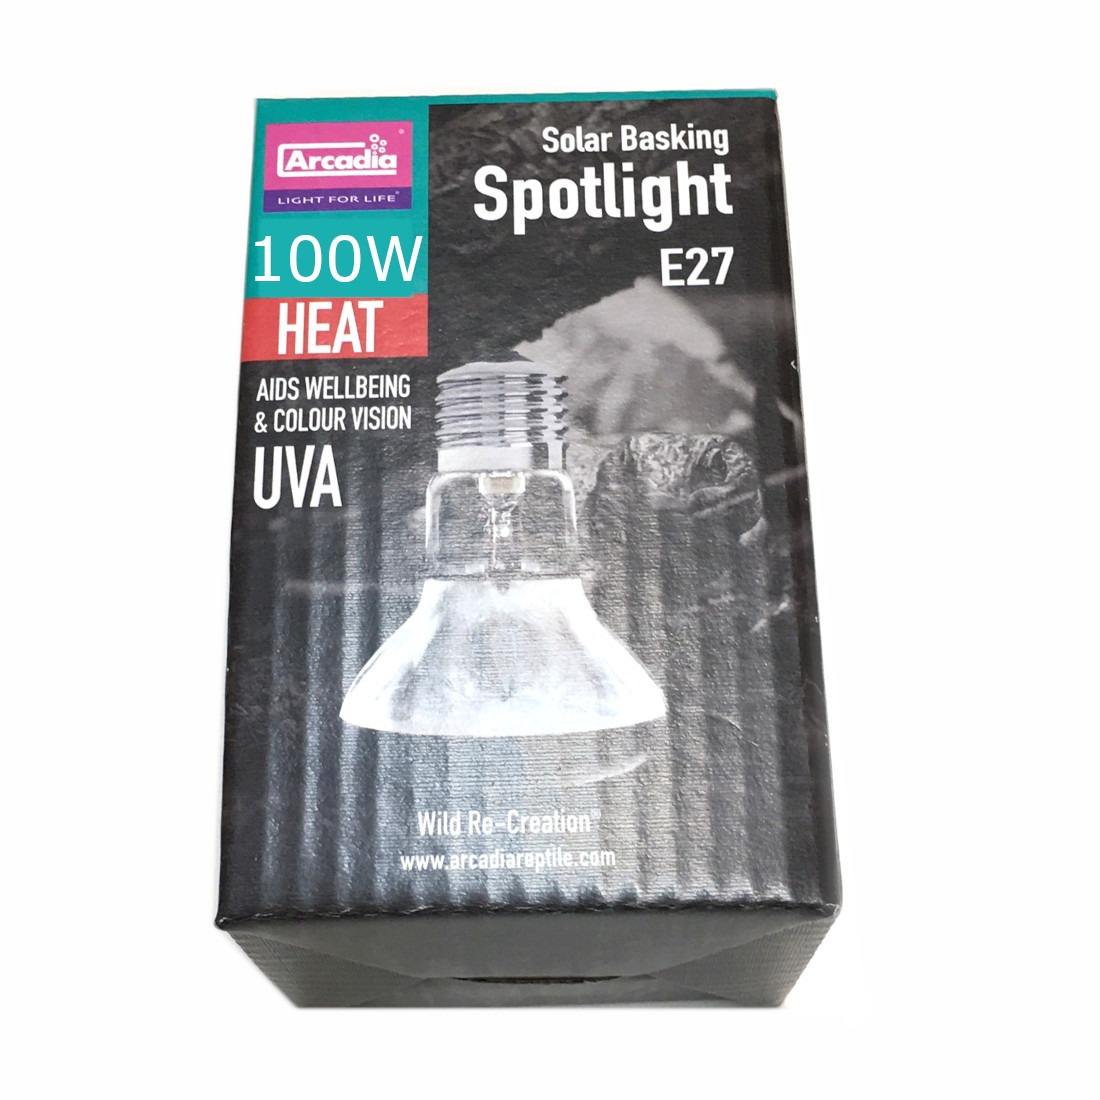 Arcadia Solar Basking Spotlight E27 100W